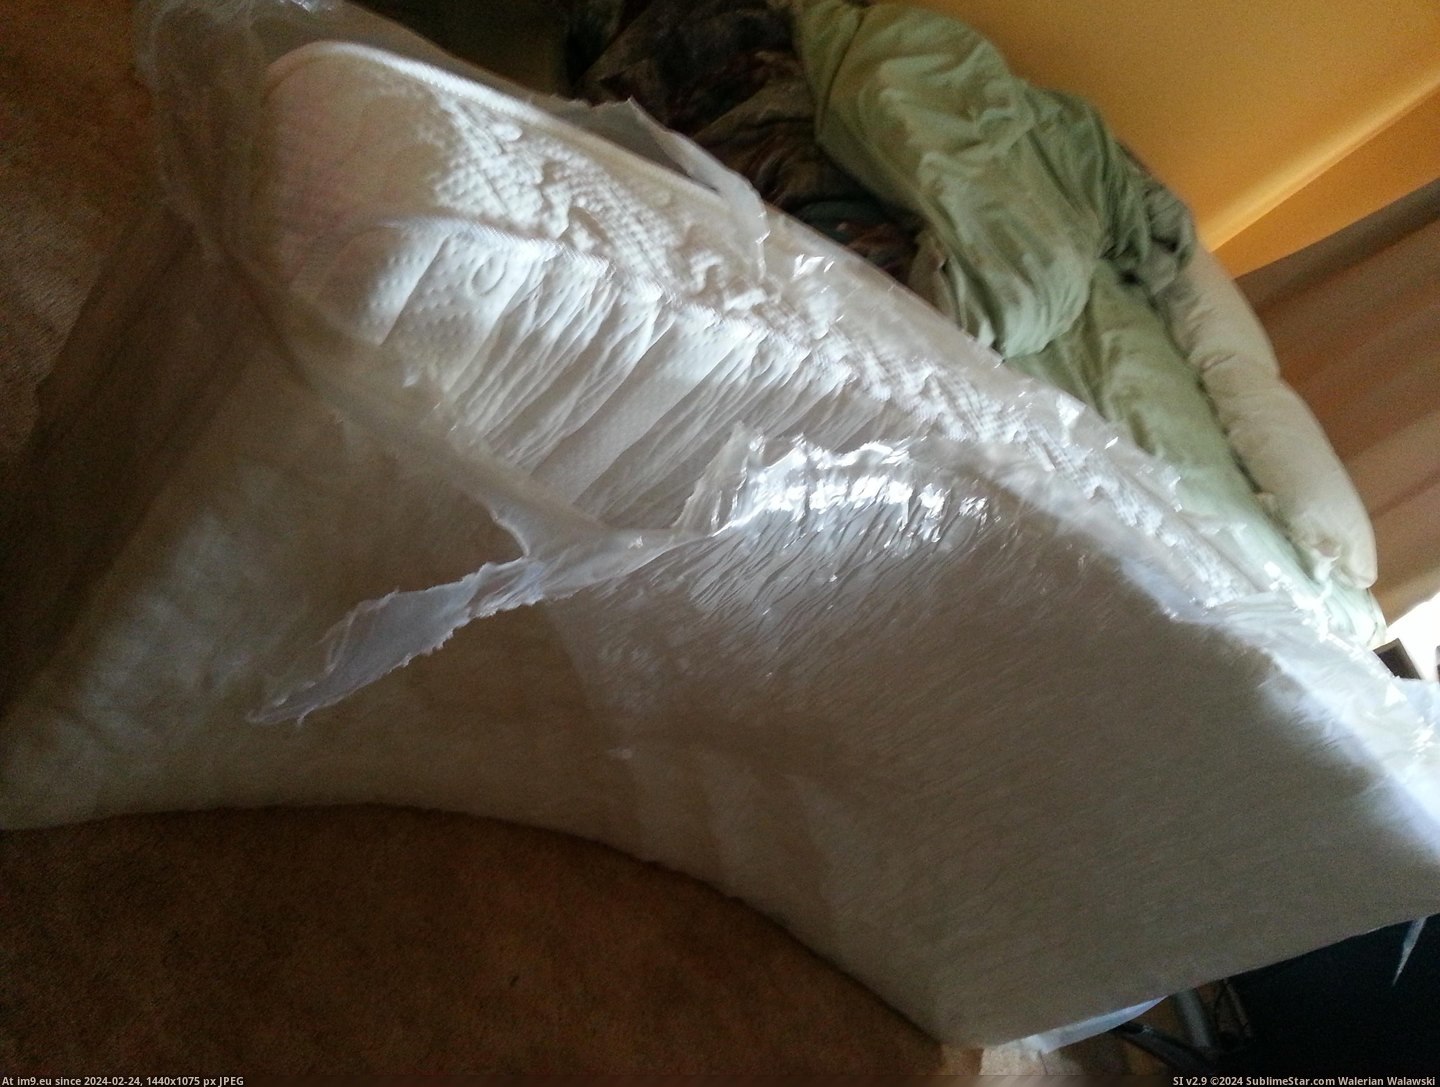 #Broke #Bag #Vacuum #Duffle #Unrolled #Seal #Mattress [Mildlyinteresting] Got a mattress in a duffle bag today, unrolled it and broke the vacuum seal 5 Pic. (Obraz z album My r/MILDLYINTERESTING favs))